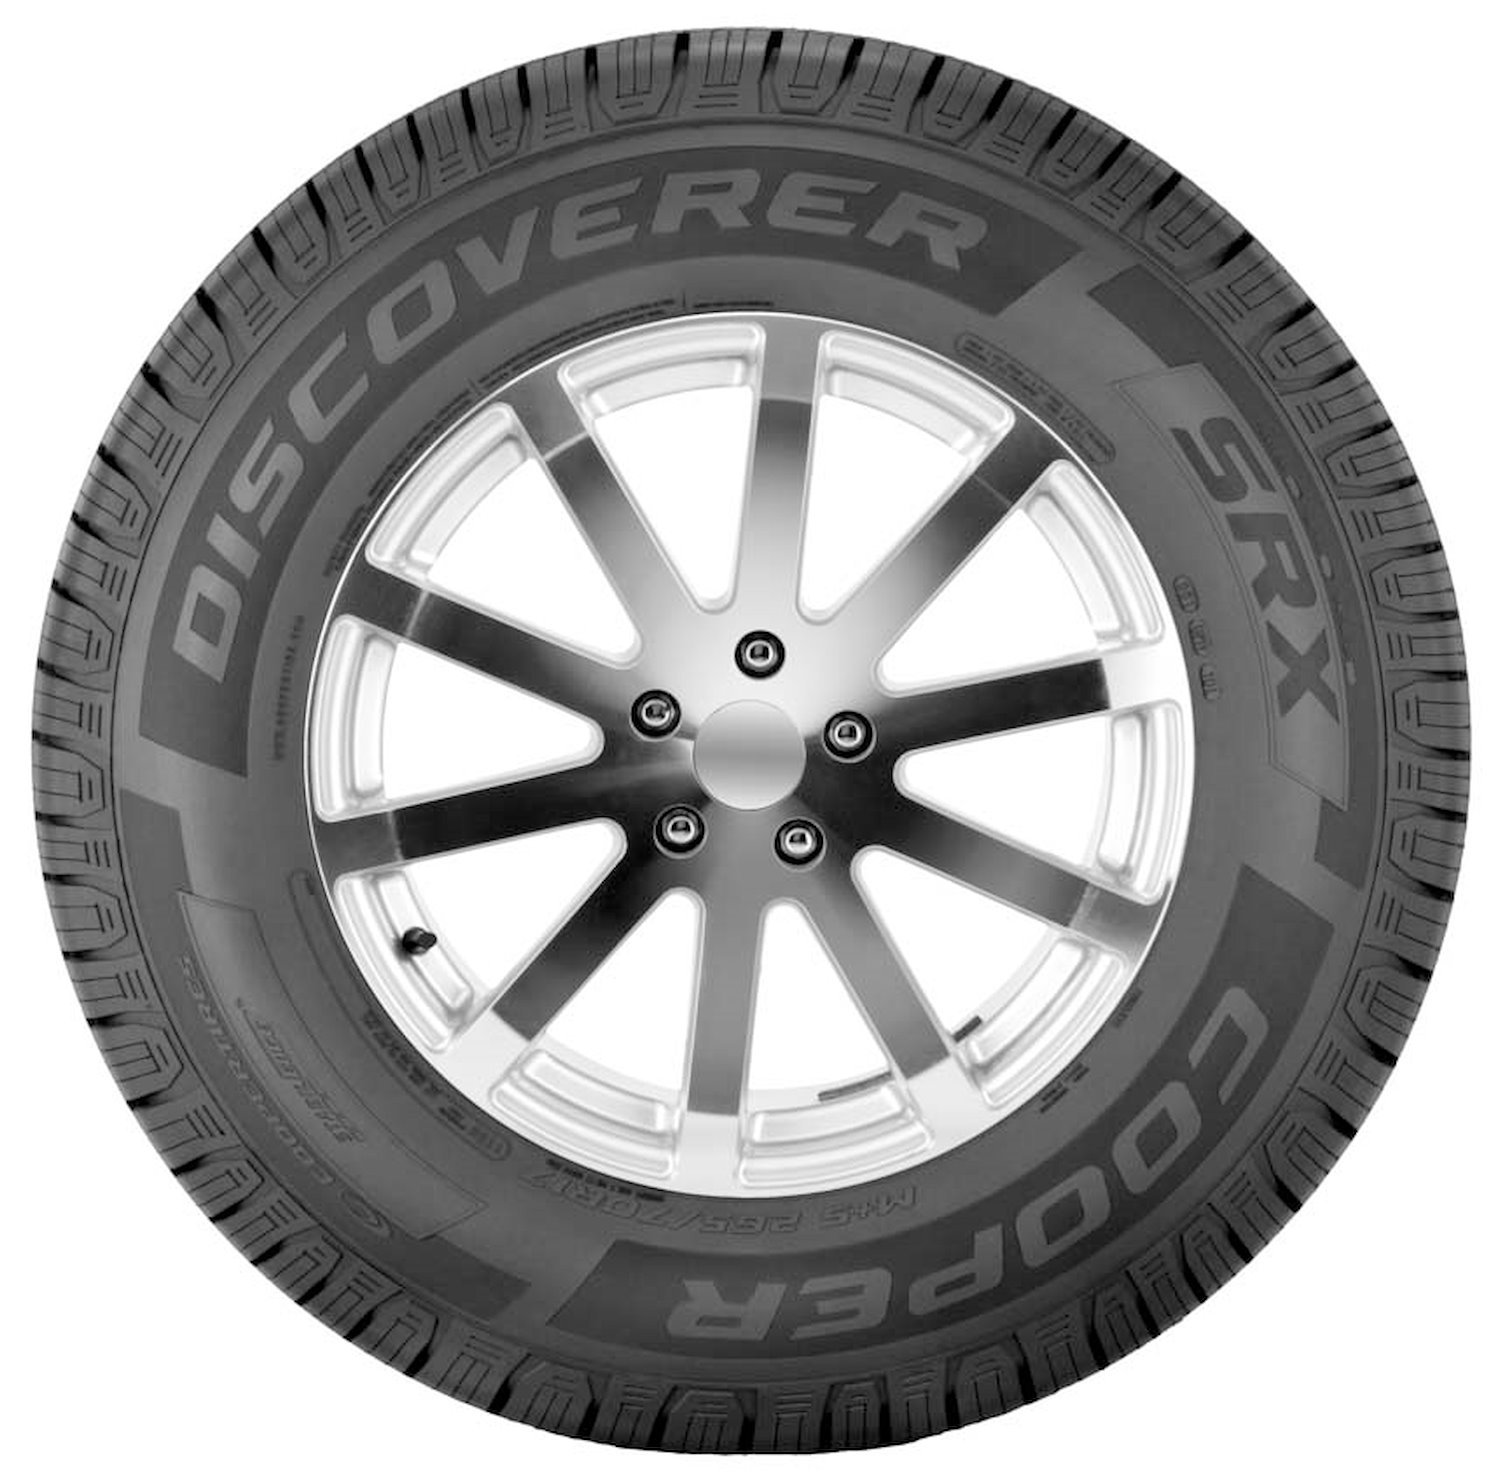 Discoverer SRX Commuter/Touring Tire, 245/70R17